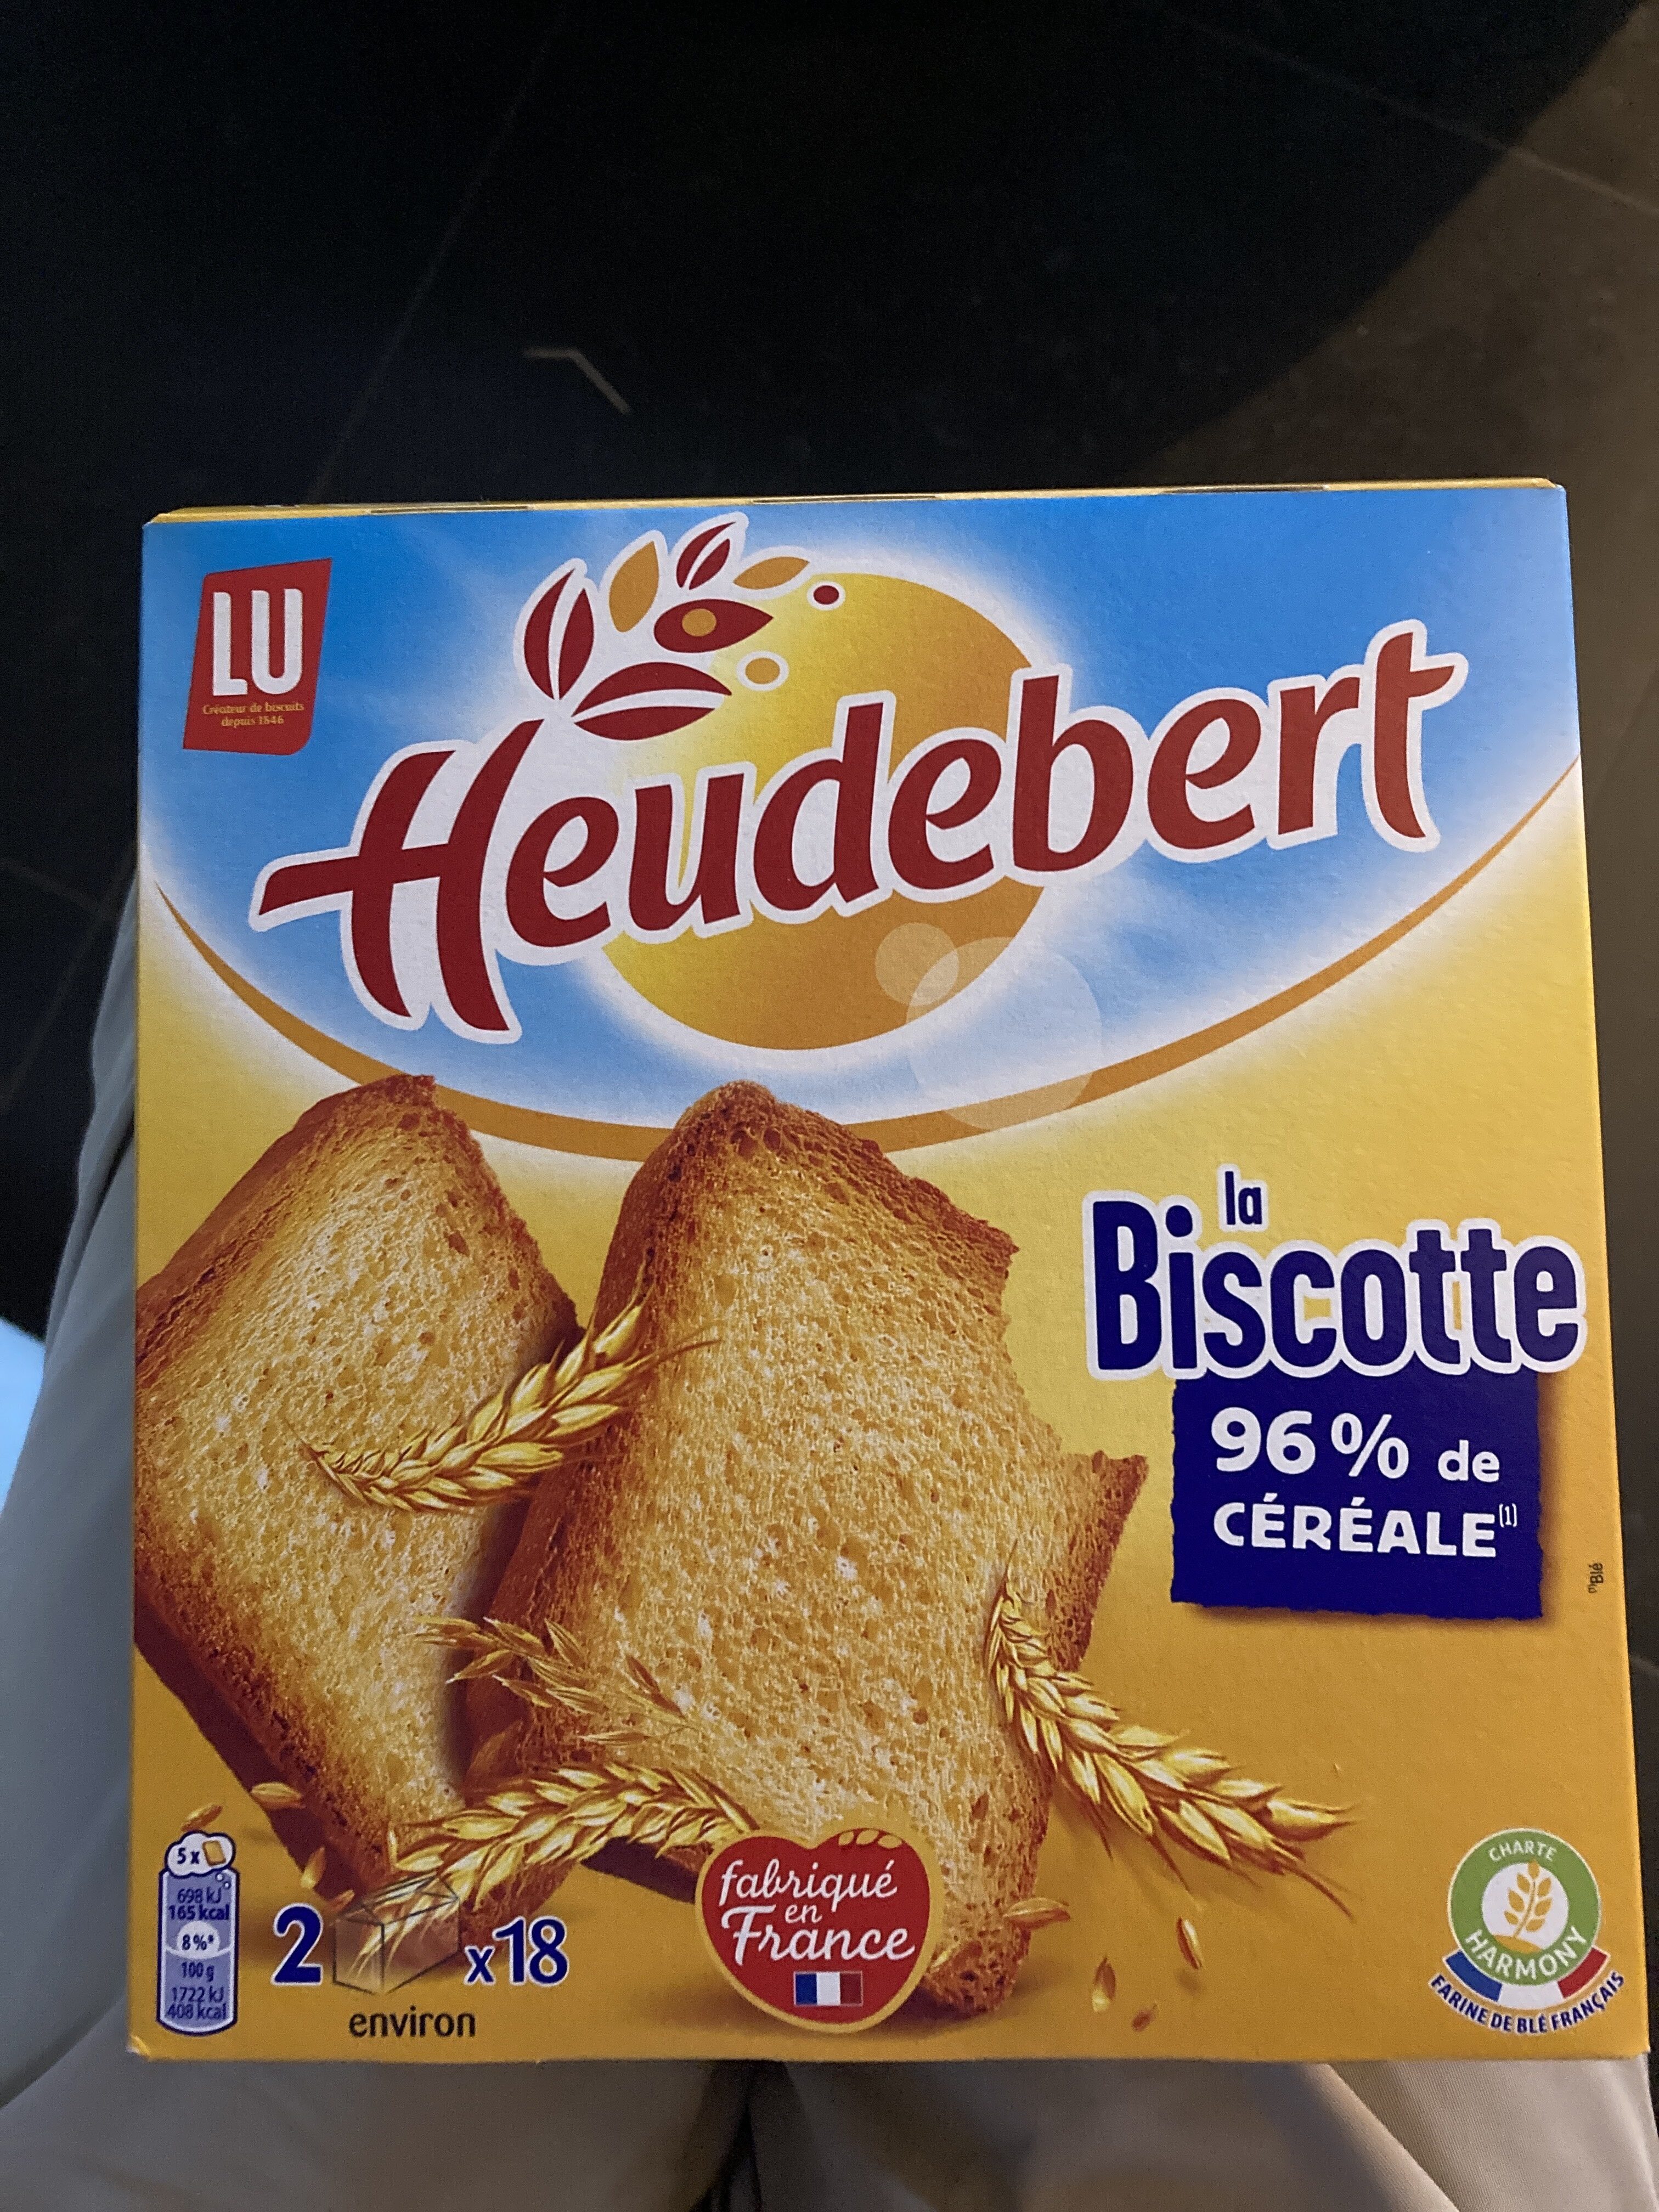 Lu - Heudebert Biscottes, 290g (10.2 oz) - Produit